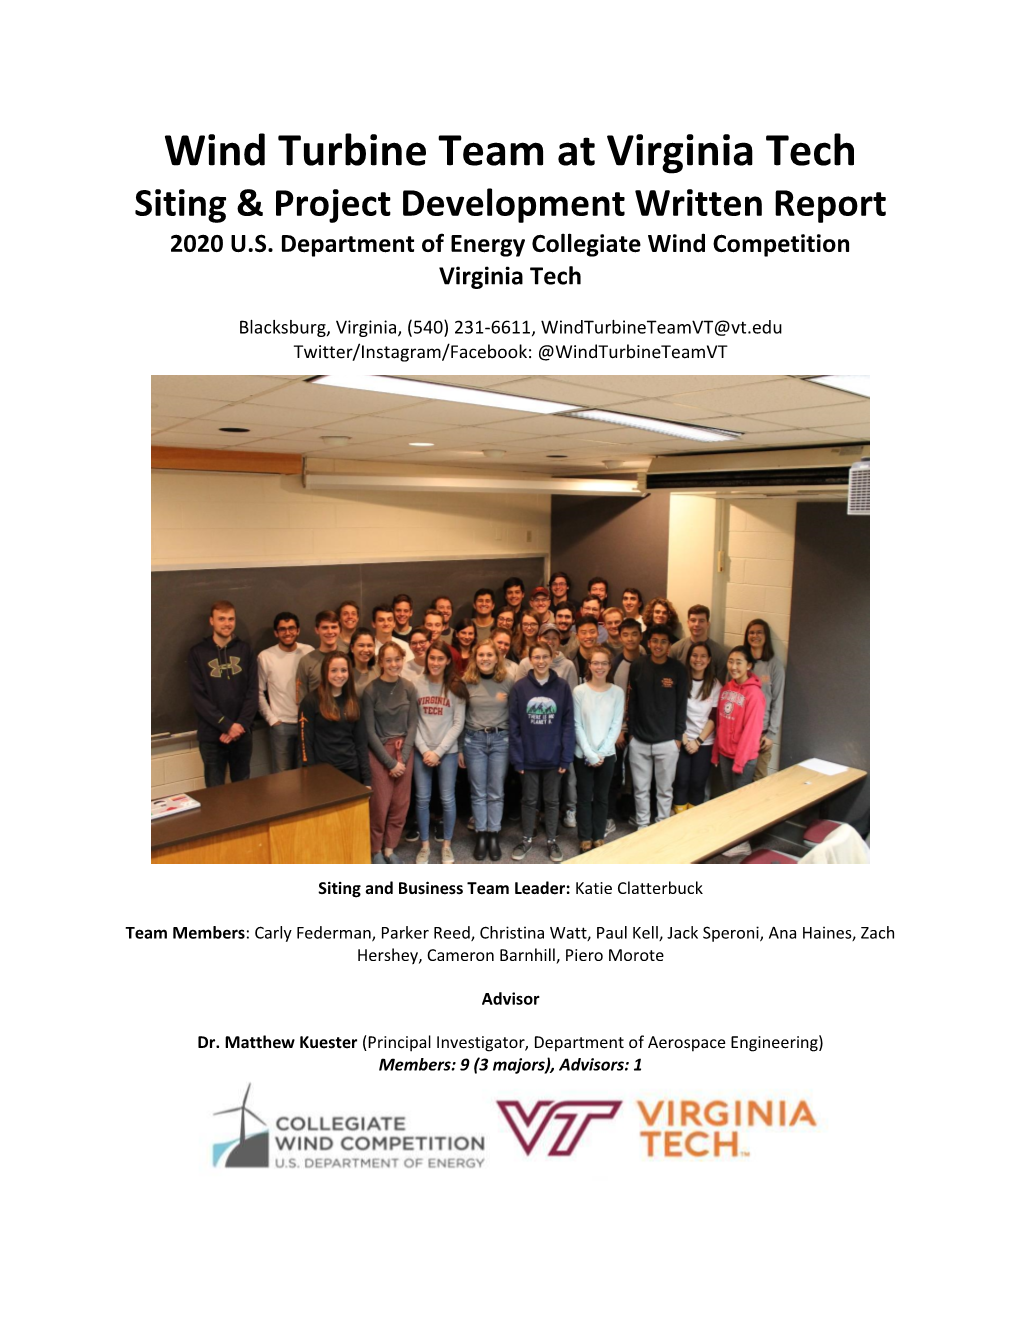 Wind Turbine Team at Virginia Tech Siting & Project Development Written Report 2020 U.S